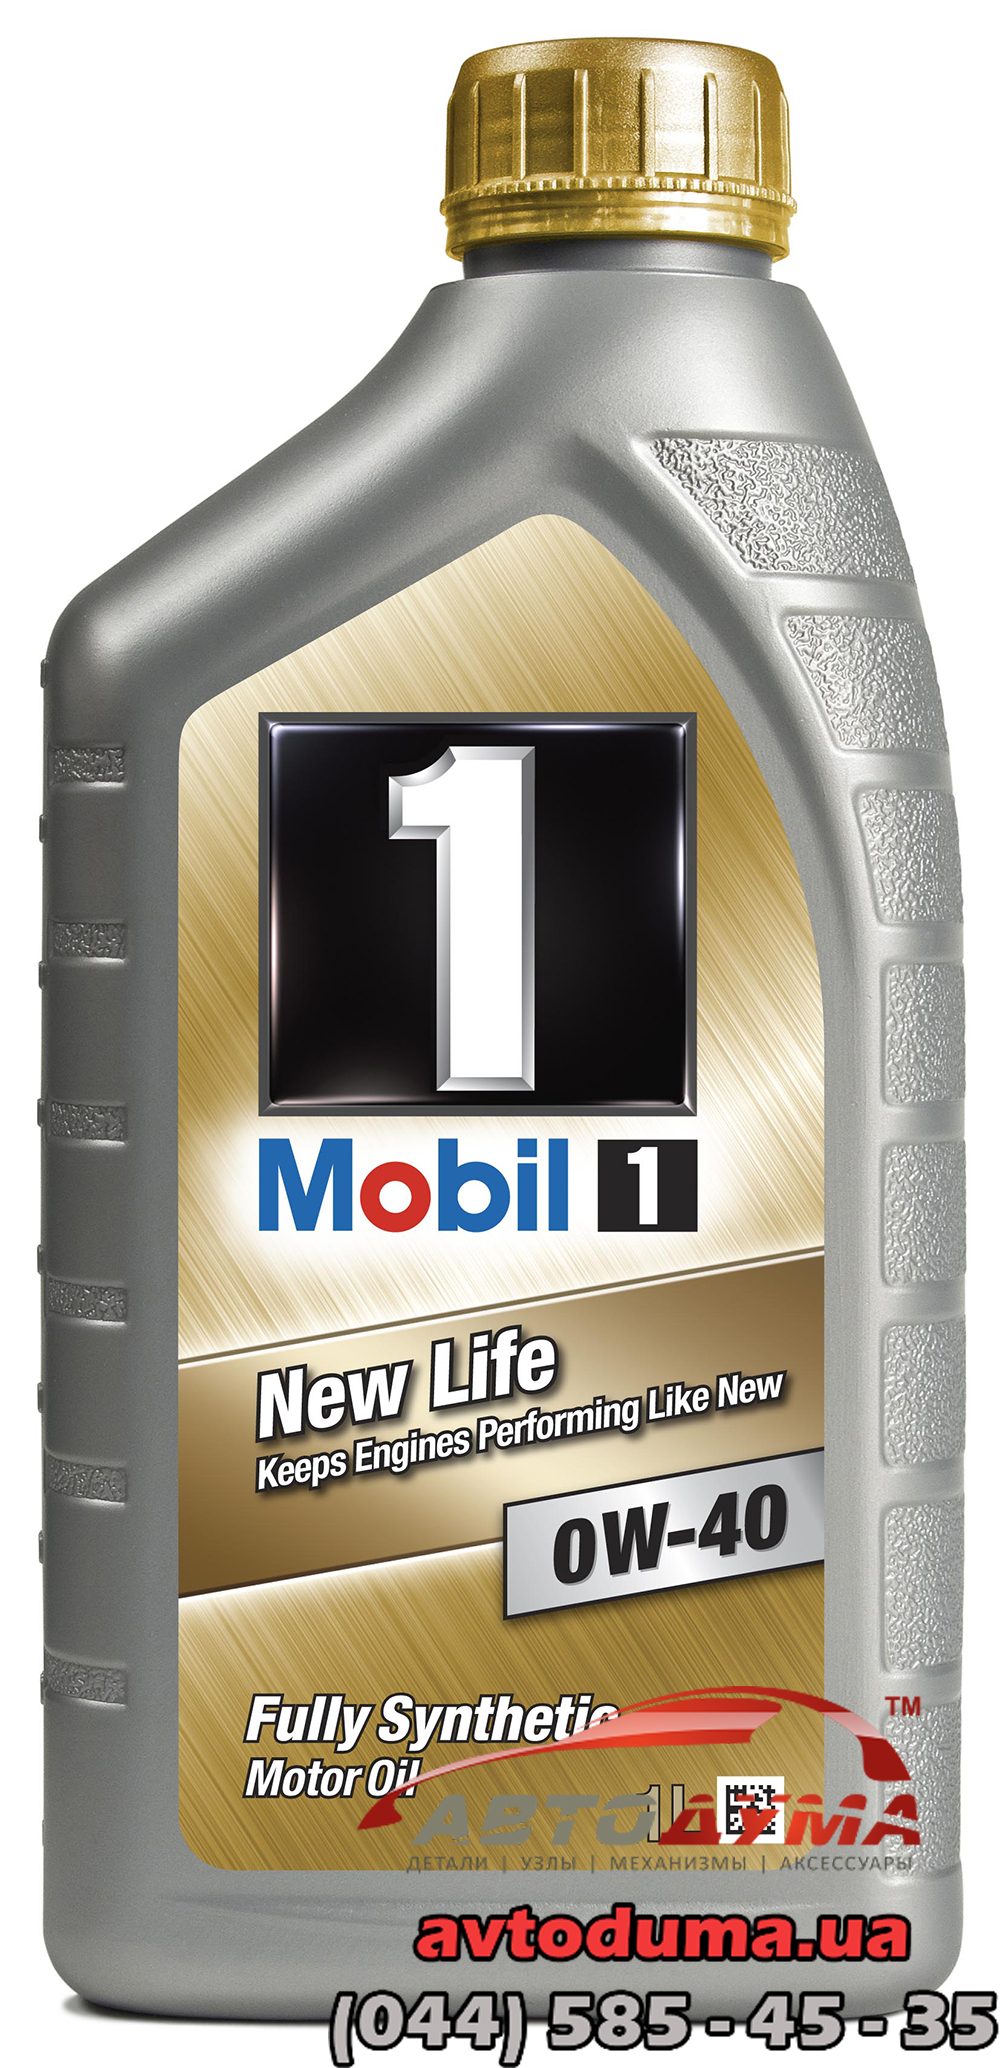 Mobil New Life 0W-40, 1л